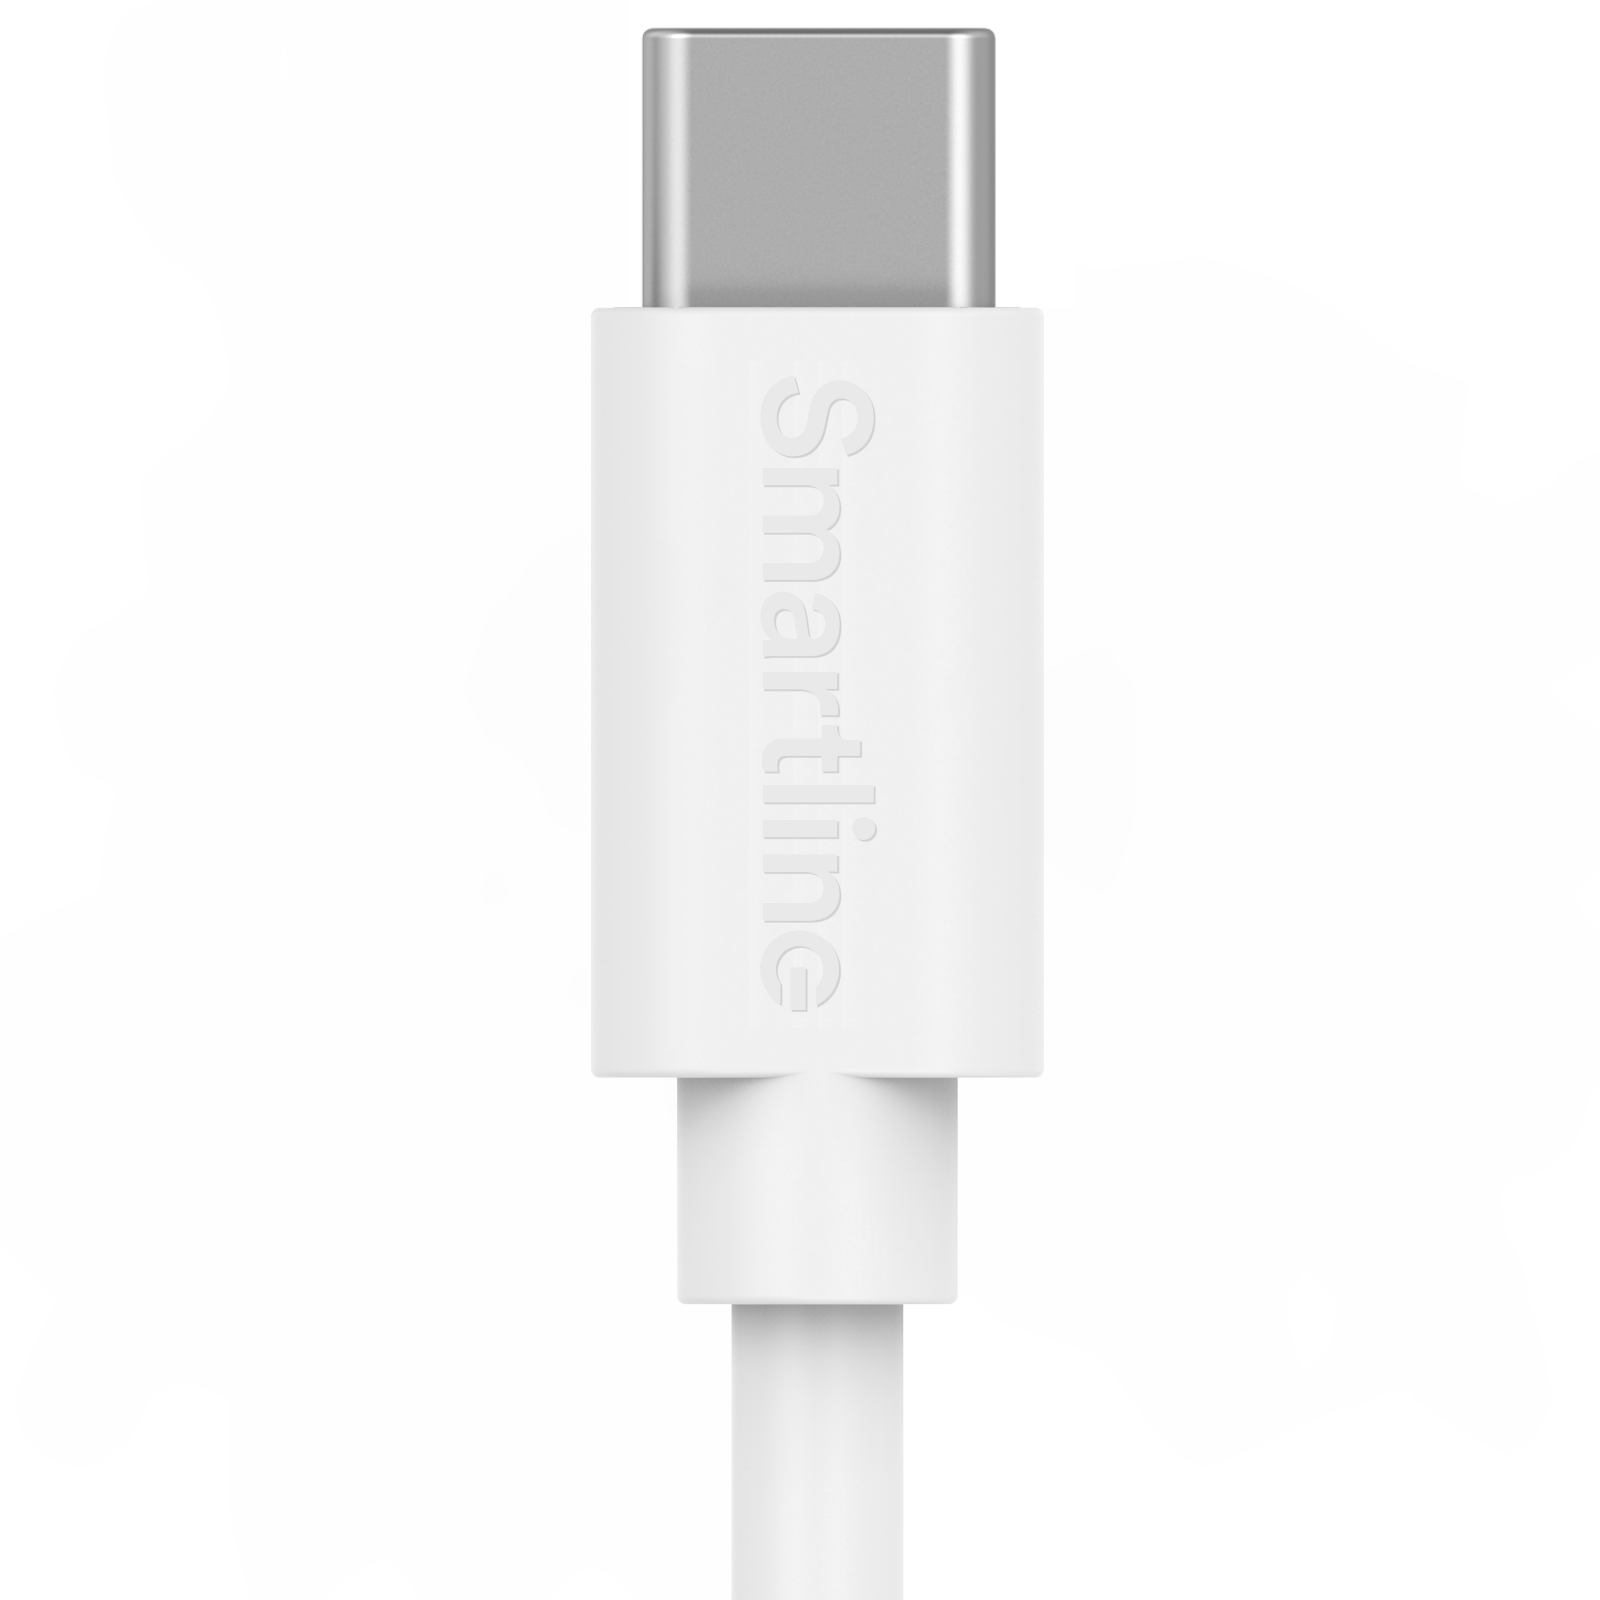 USB Cable USB-C 3m hvid